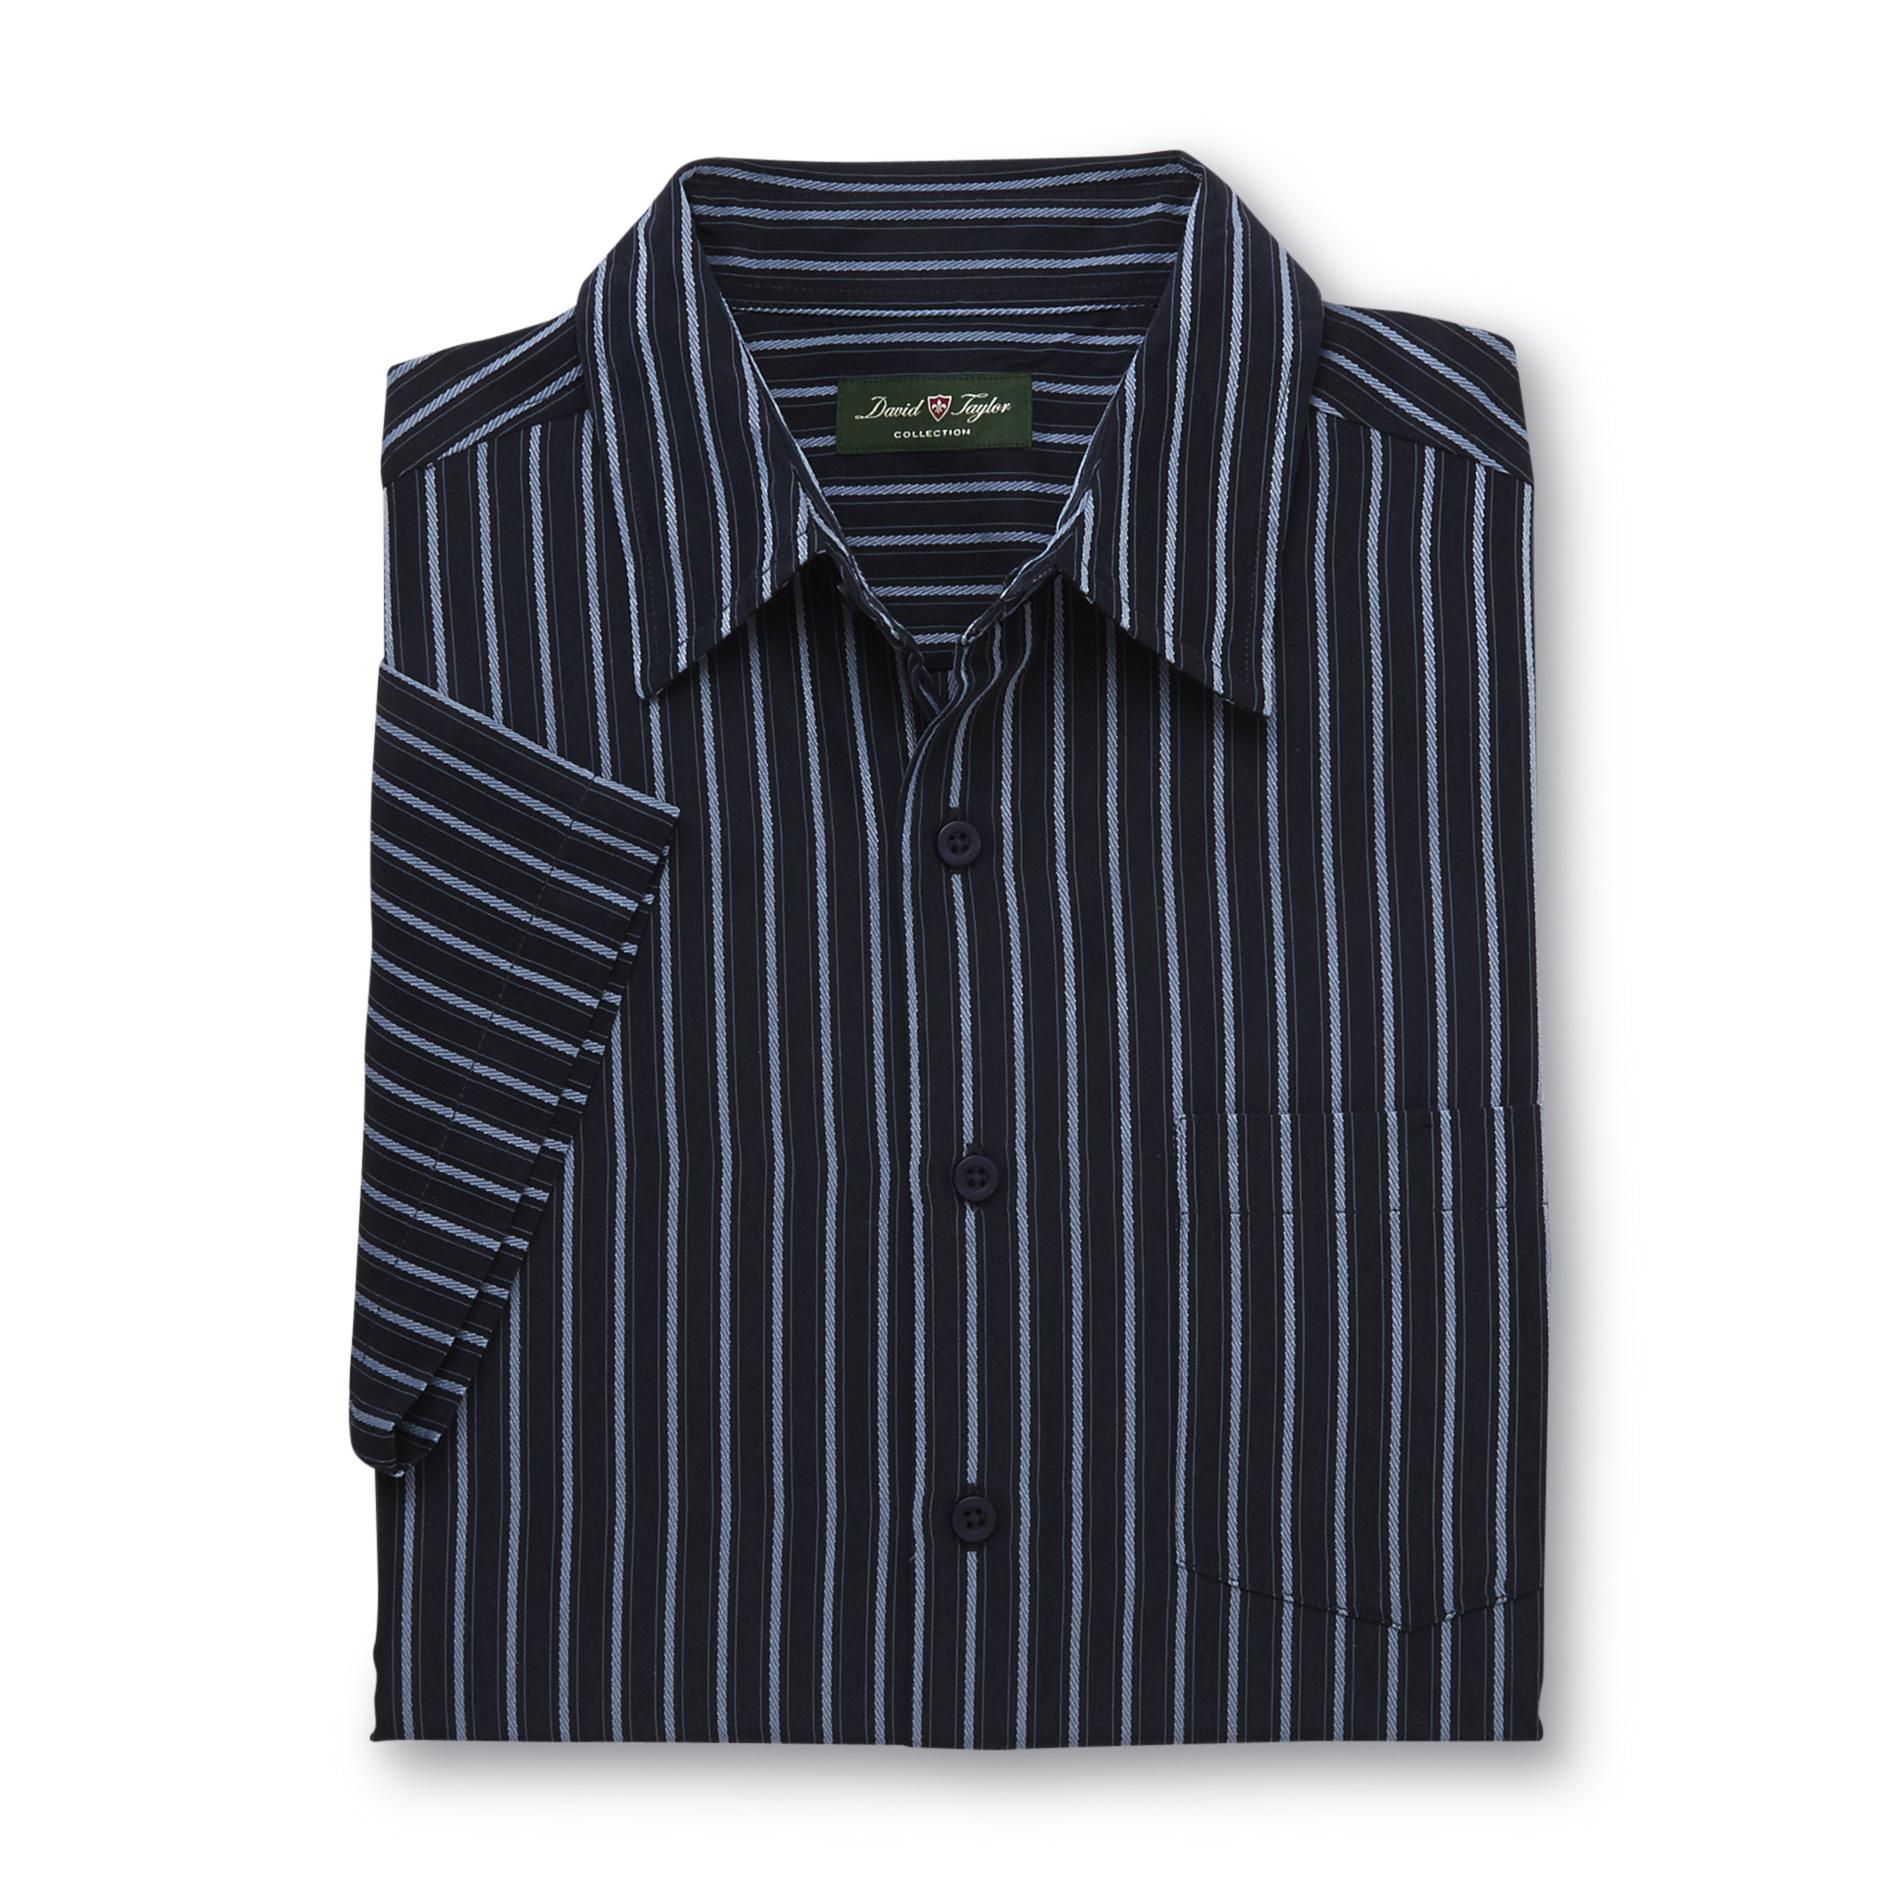 David Taylor Collection Men's Big & Tall Short-Sleeve Shirt - Striped